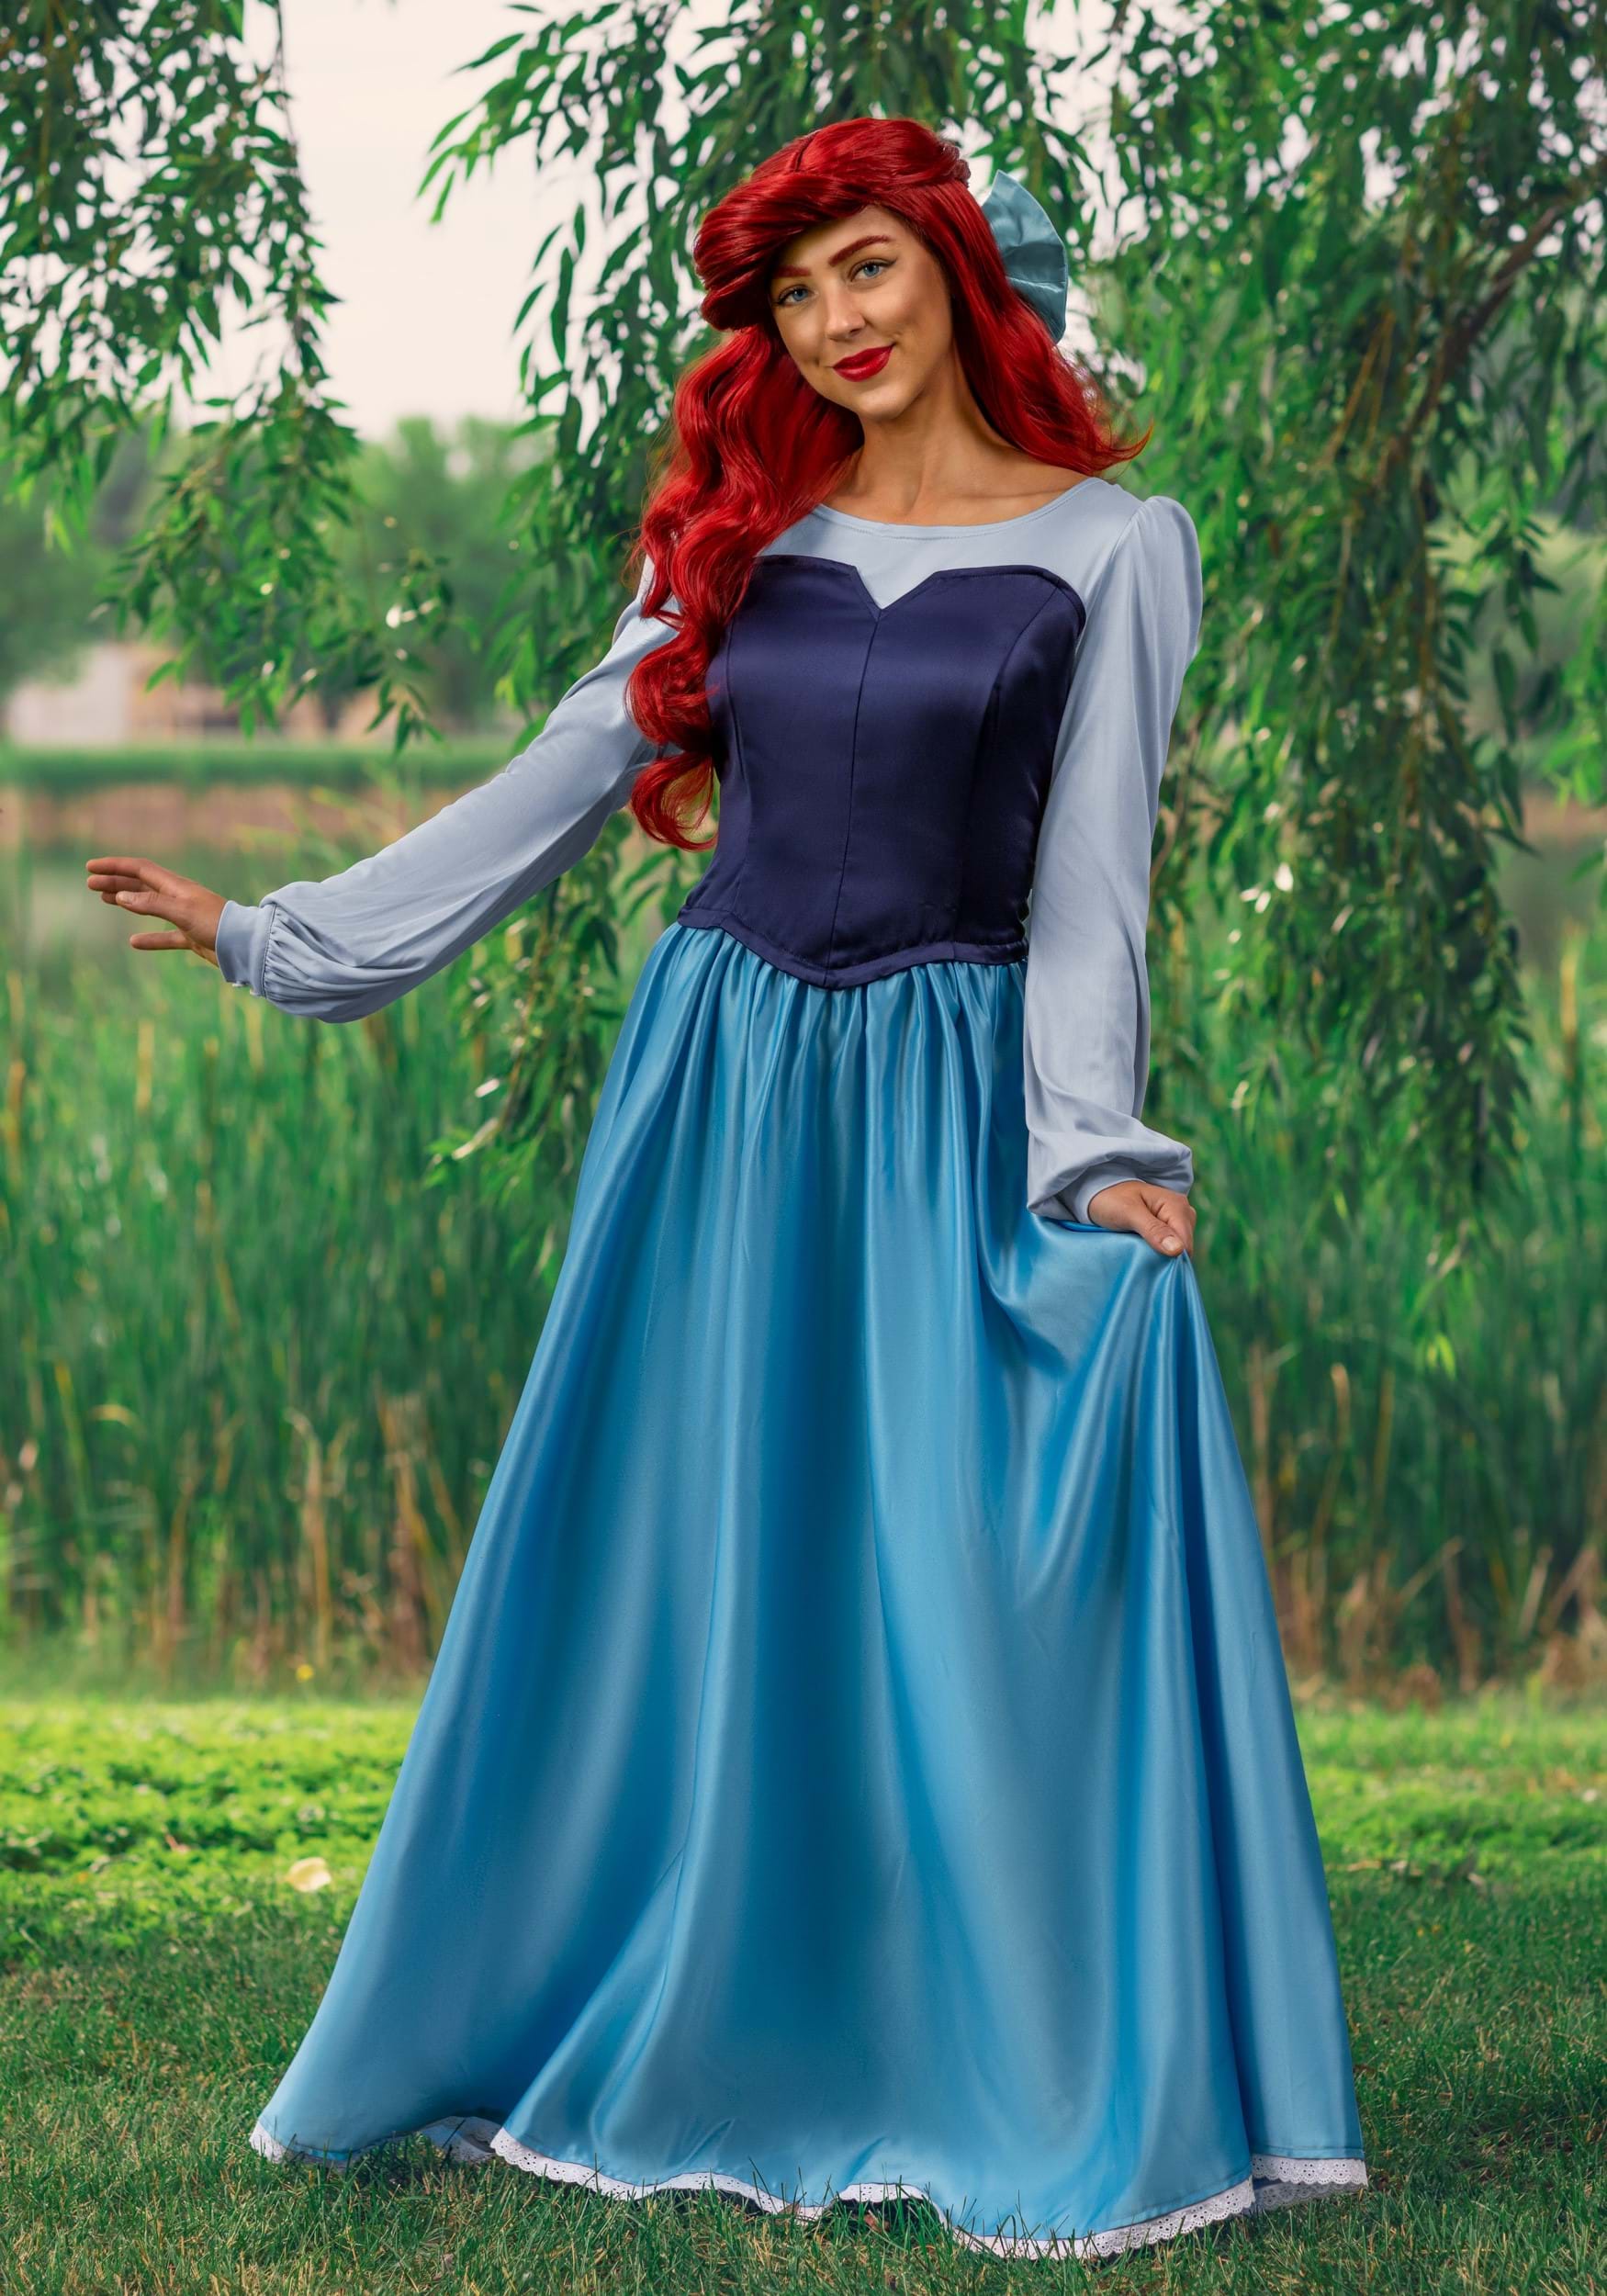 Ariel blue dress cosplay pattern